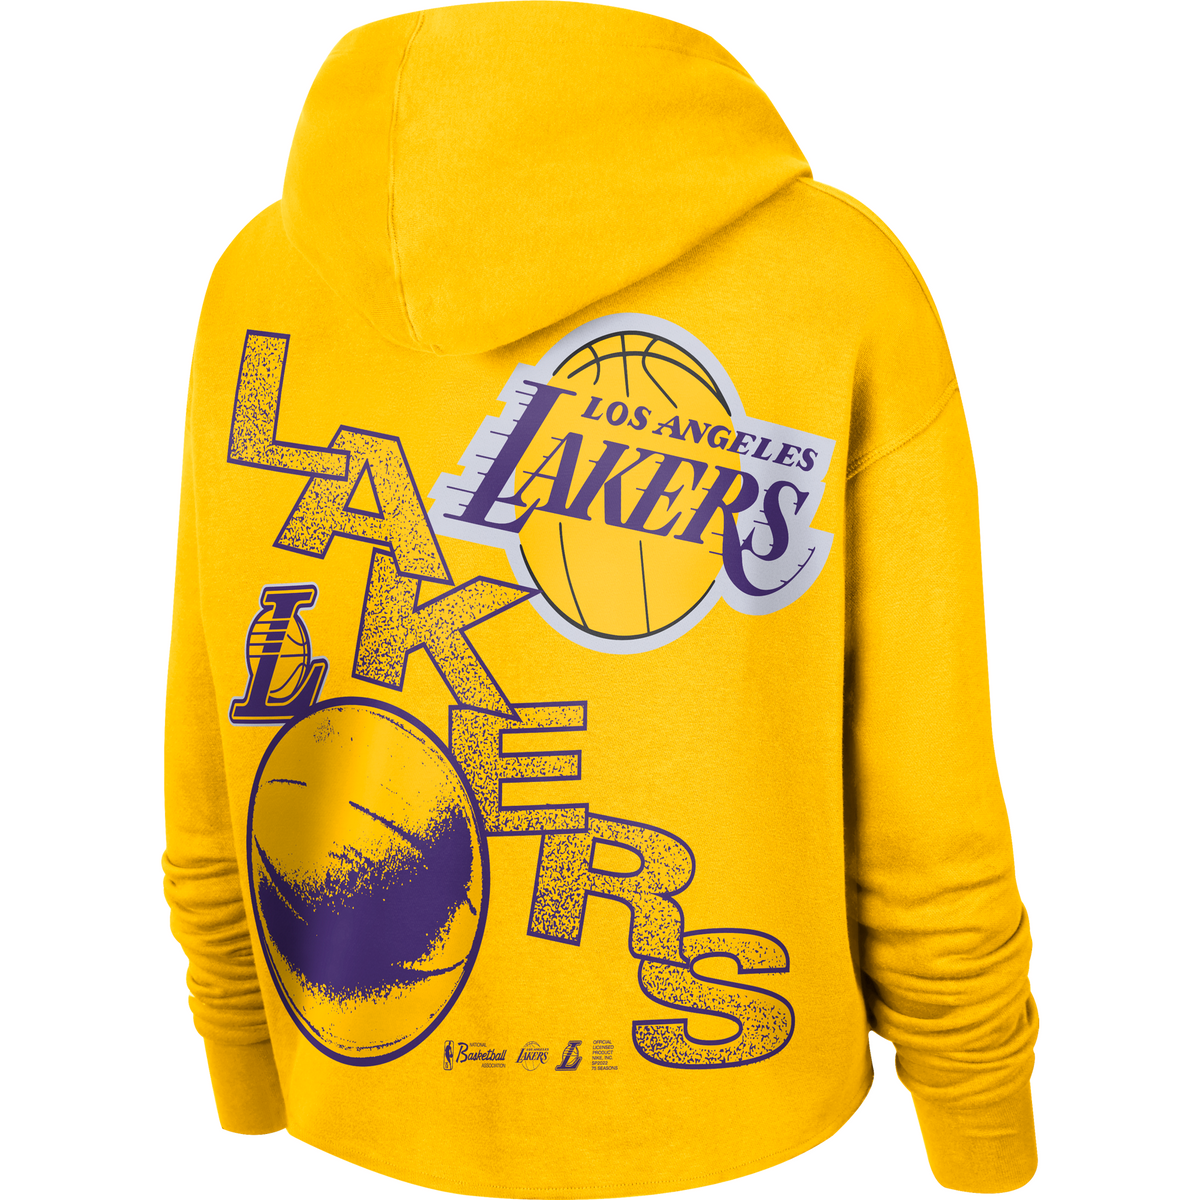 Los Angeles Lakers Courtside City Edition Women's Nike NBA Fleece